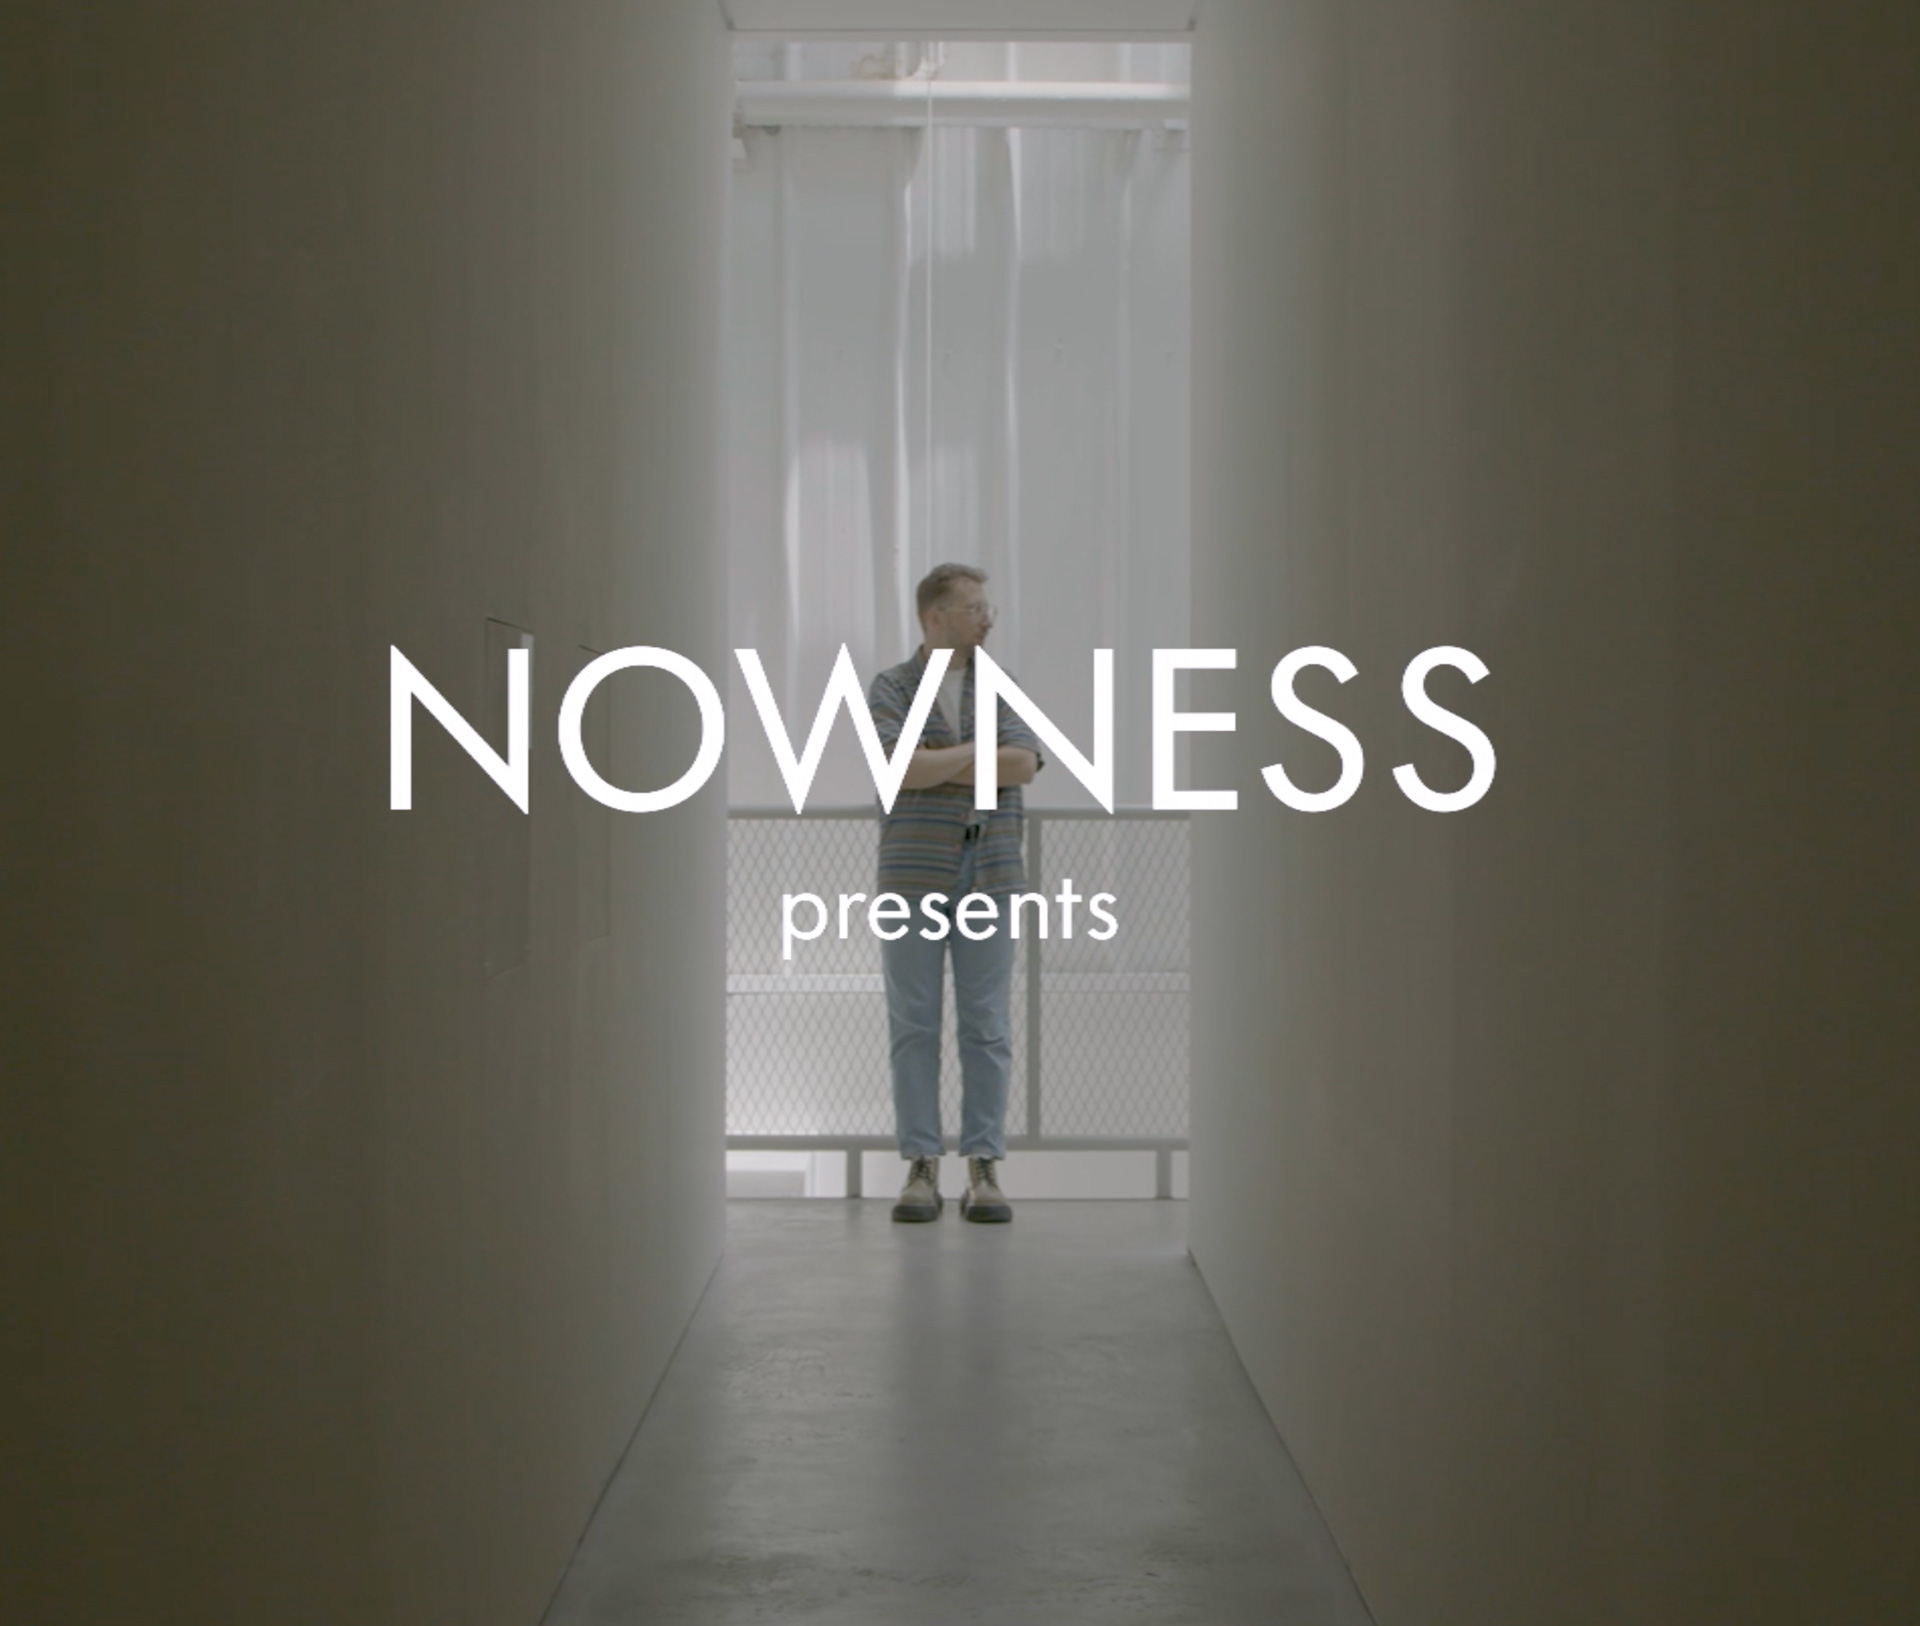 Meet Dubai-based artist Lawrence Abu Hamdan | Presented by Art Basel in partnership with Nowness